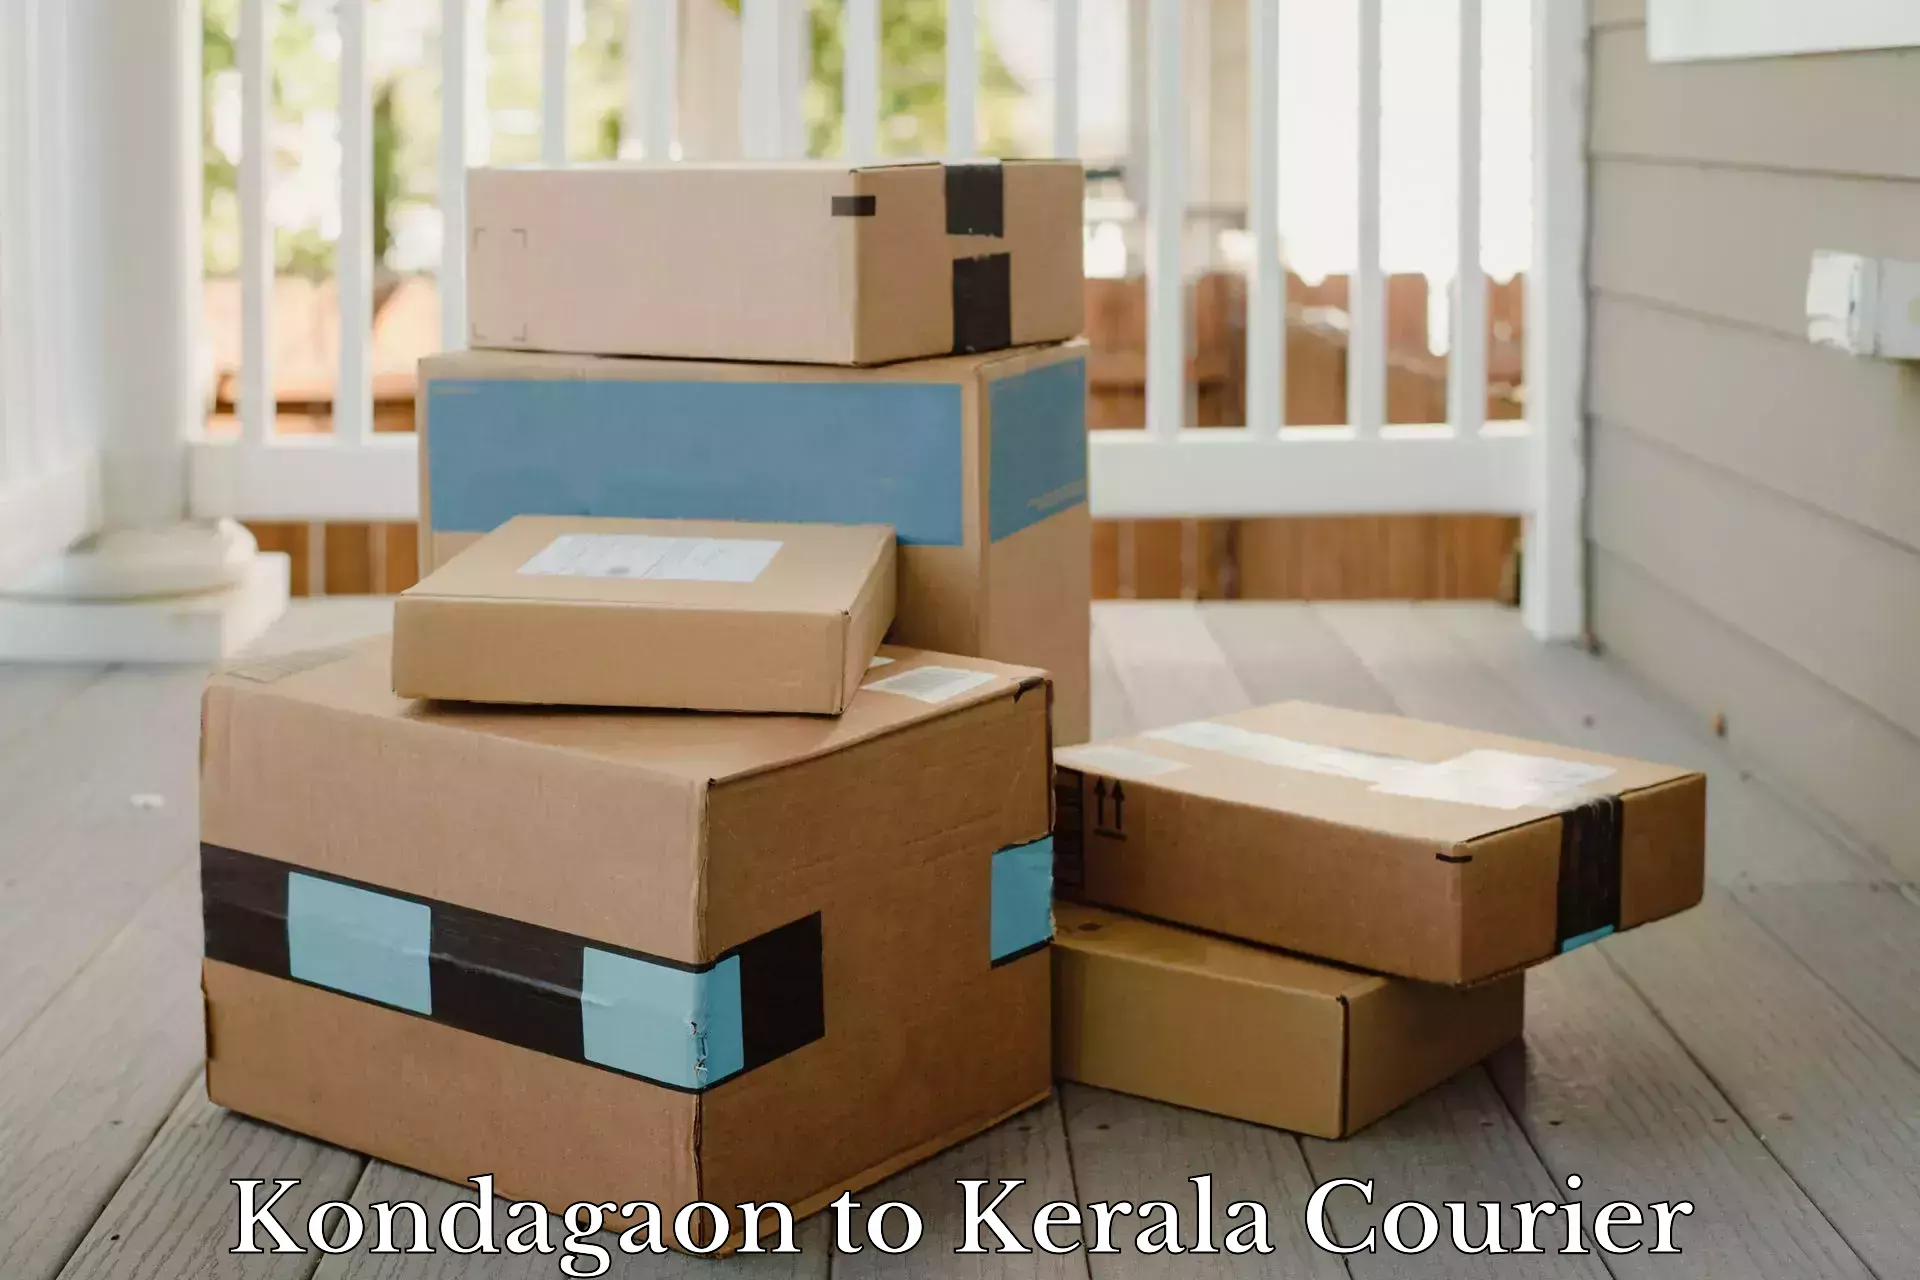 Supply chain efficiency Kondagaon to Chalakudy